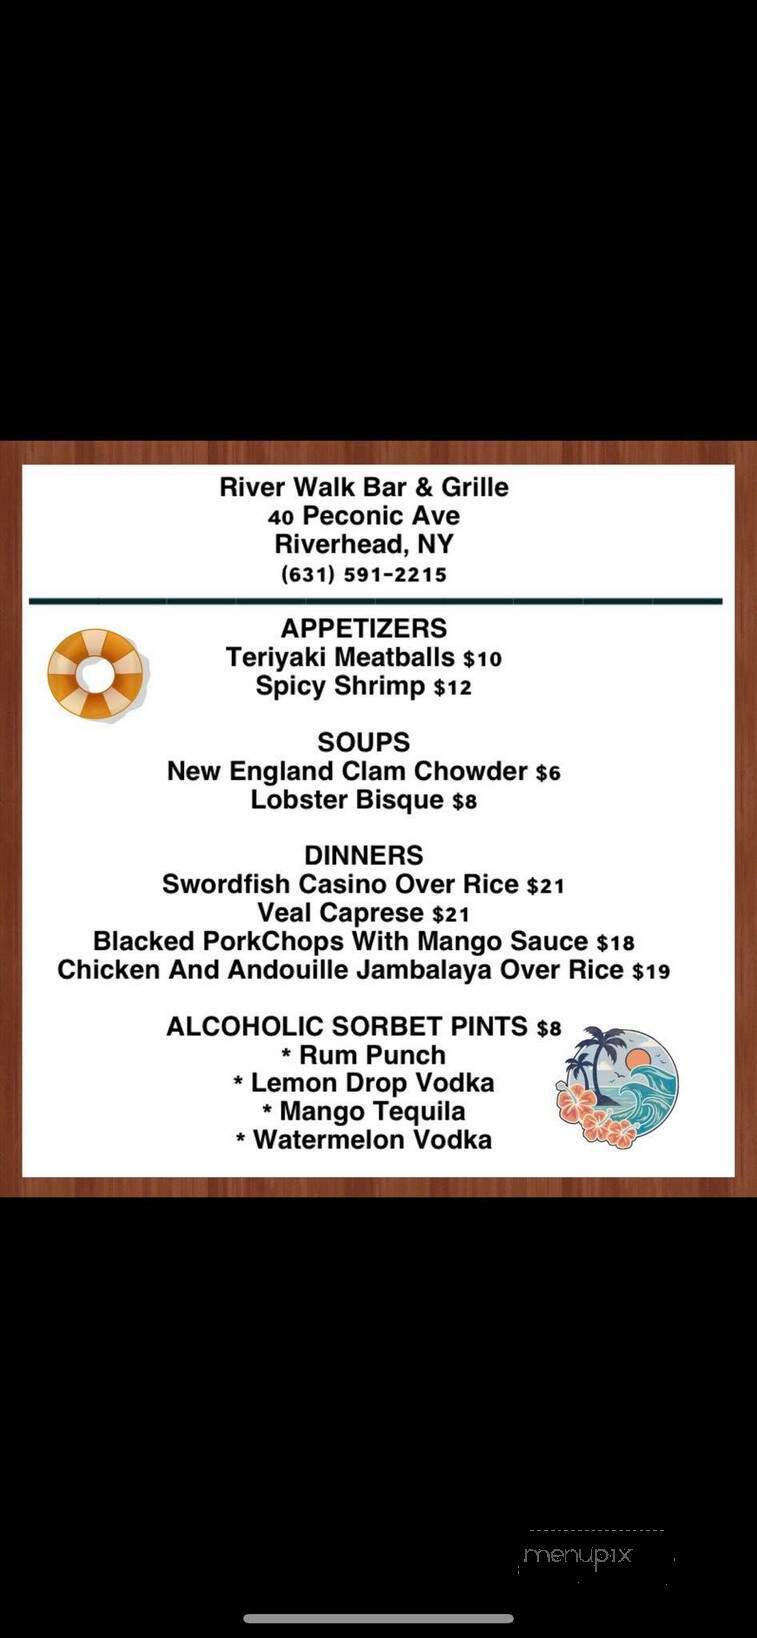 River Walk Bar & Grille - Riverhead, NY